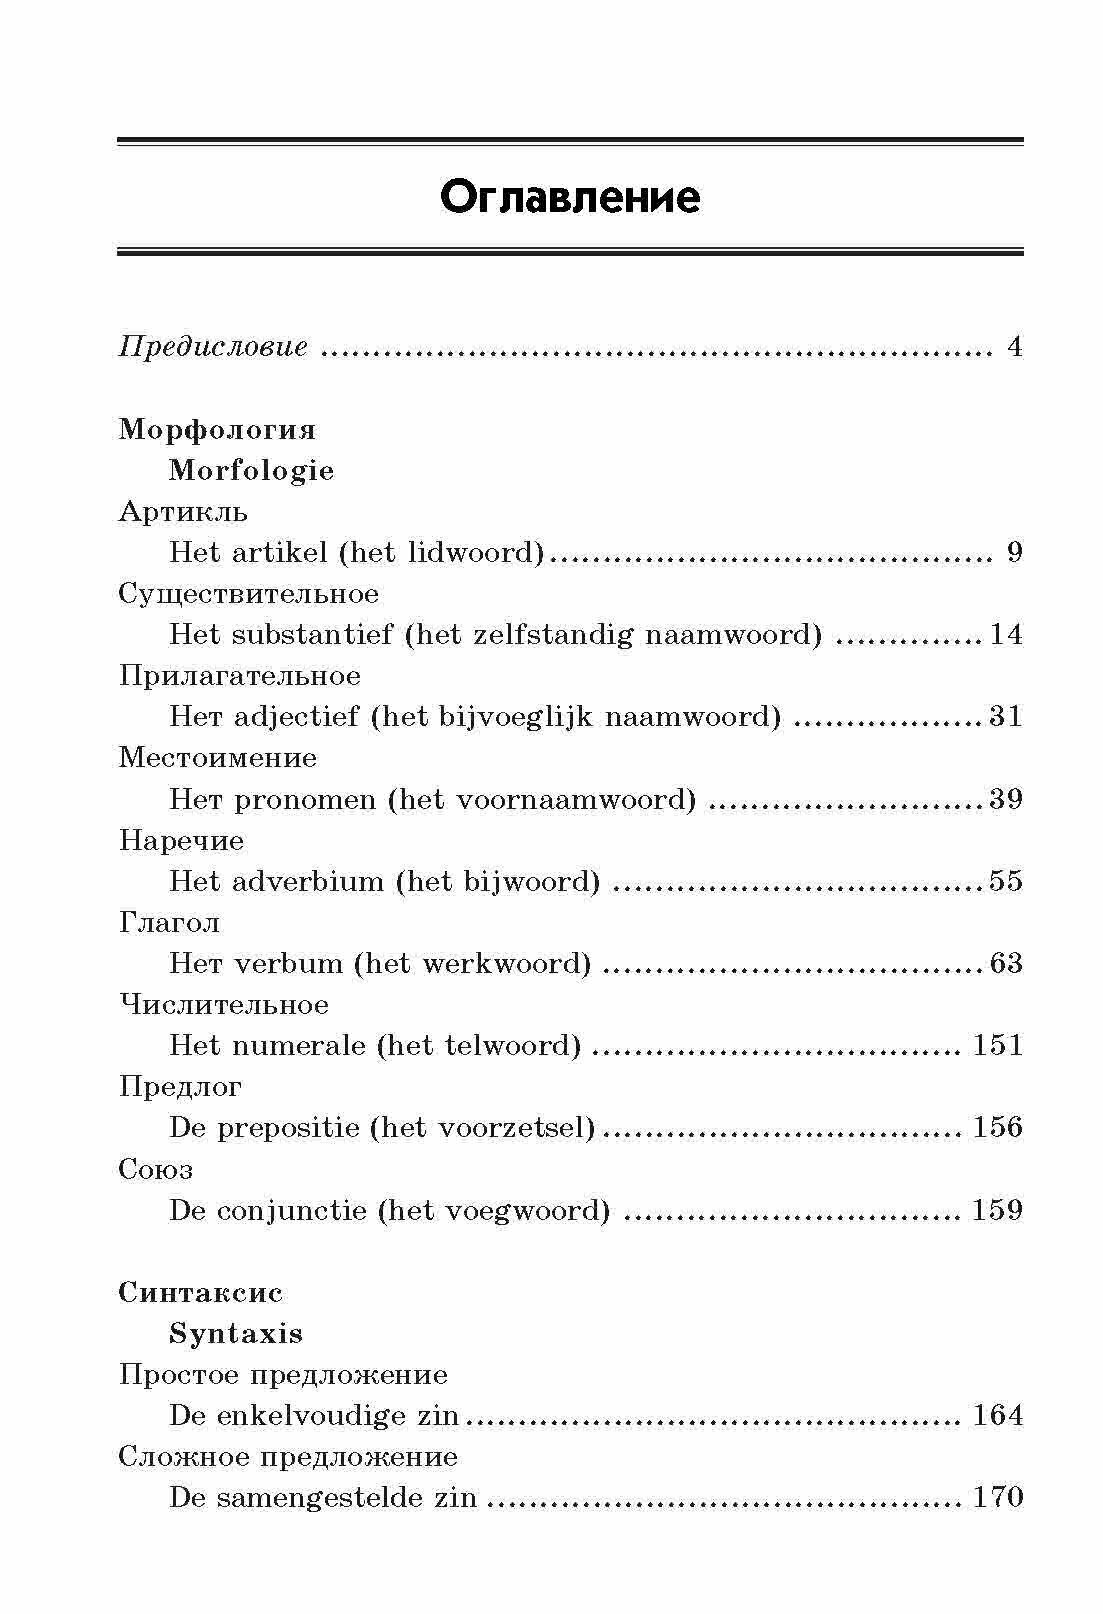 Нидерландская грамматика в таблицах и схемах - фото №7